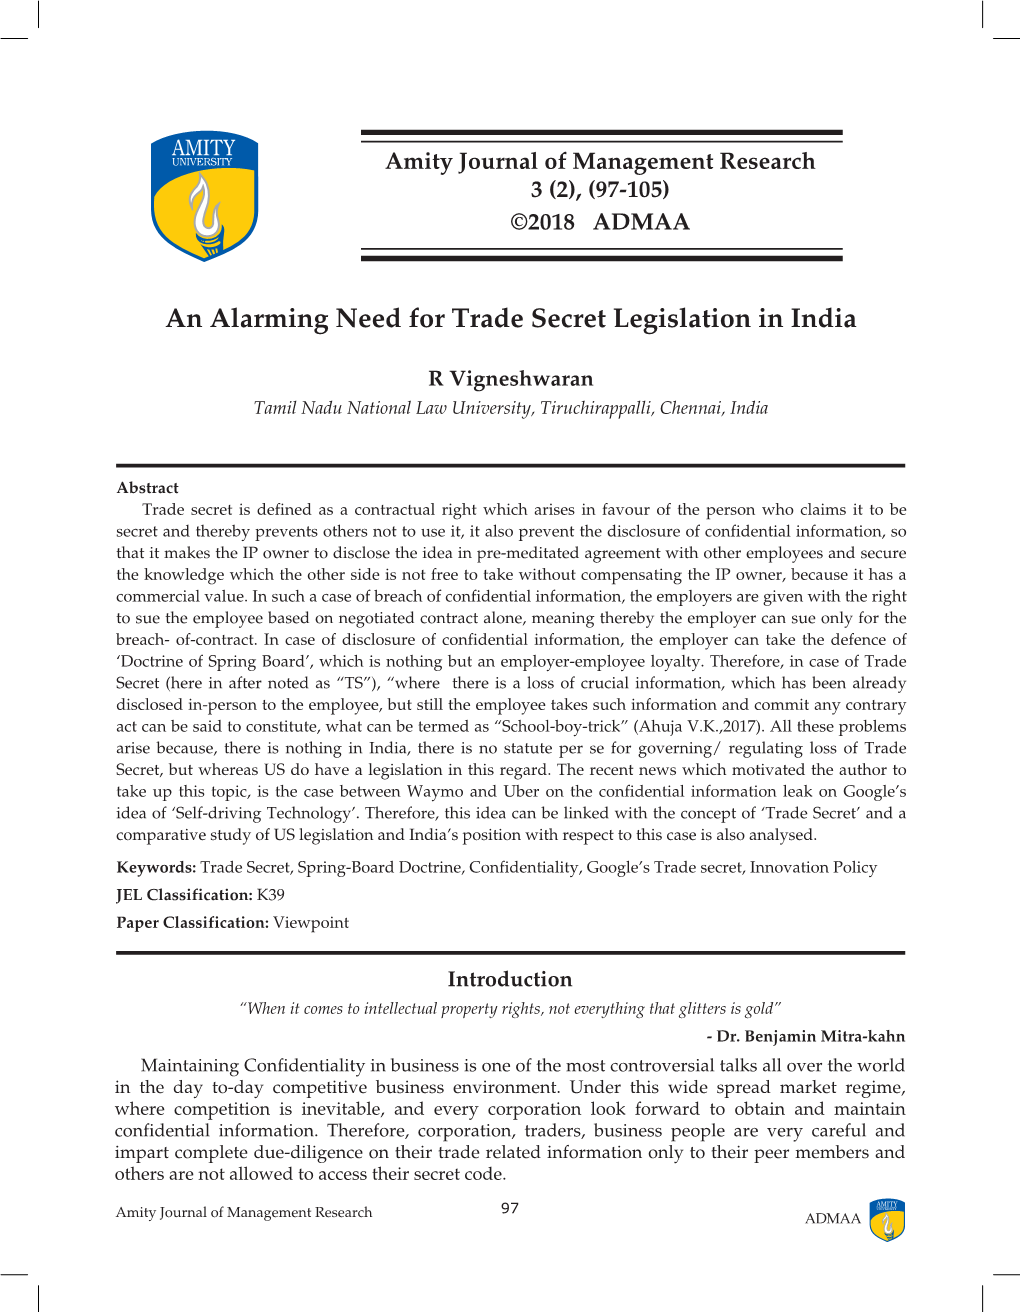 An Alarming Need for Trade Secret Legislation in India